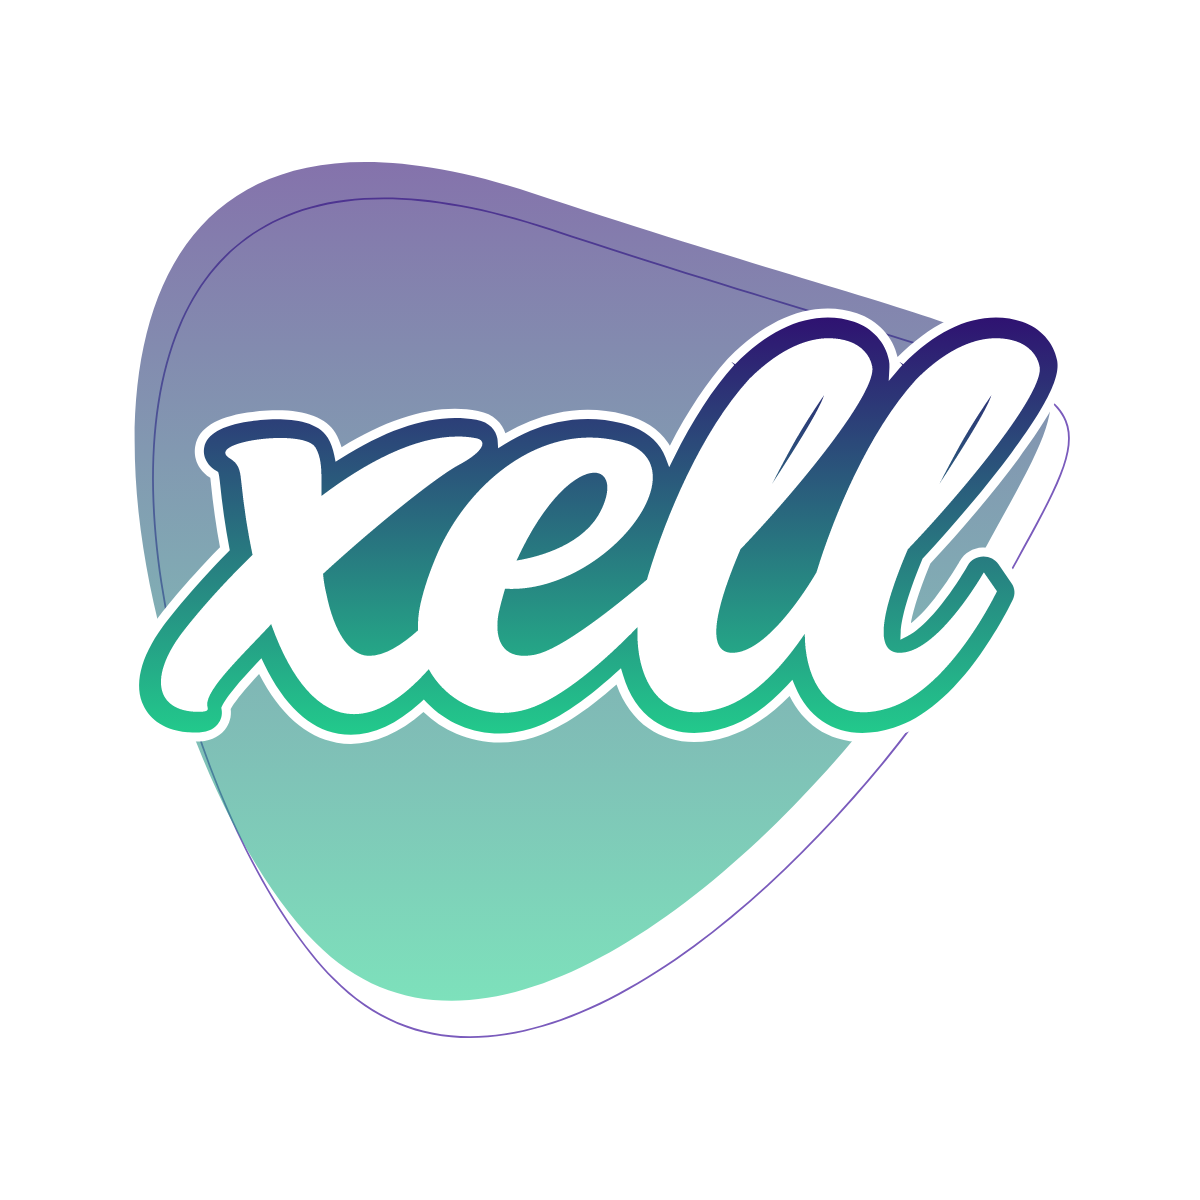 Xell Shop